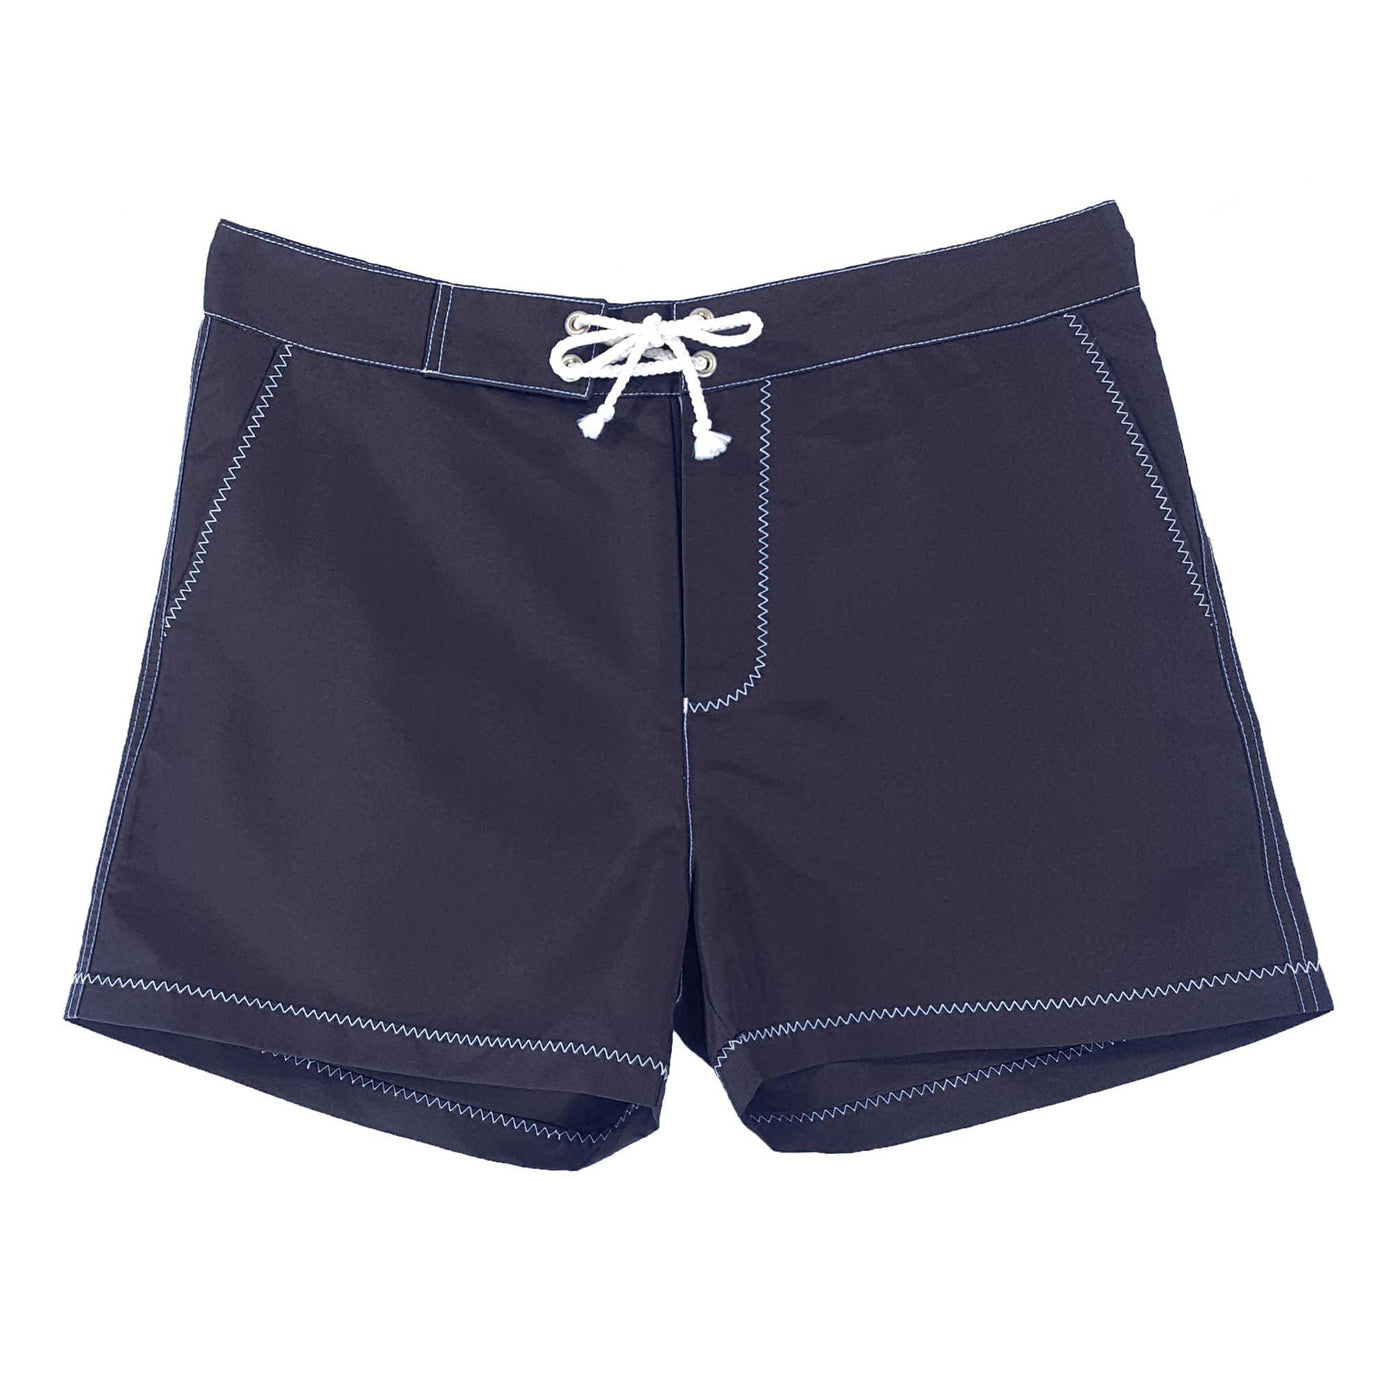 Navy blue recycled swim shorts for men - white stitching